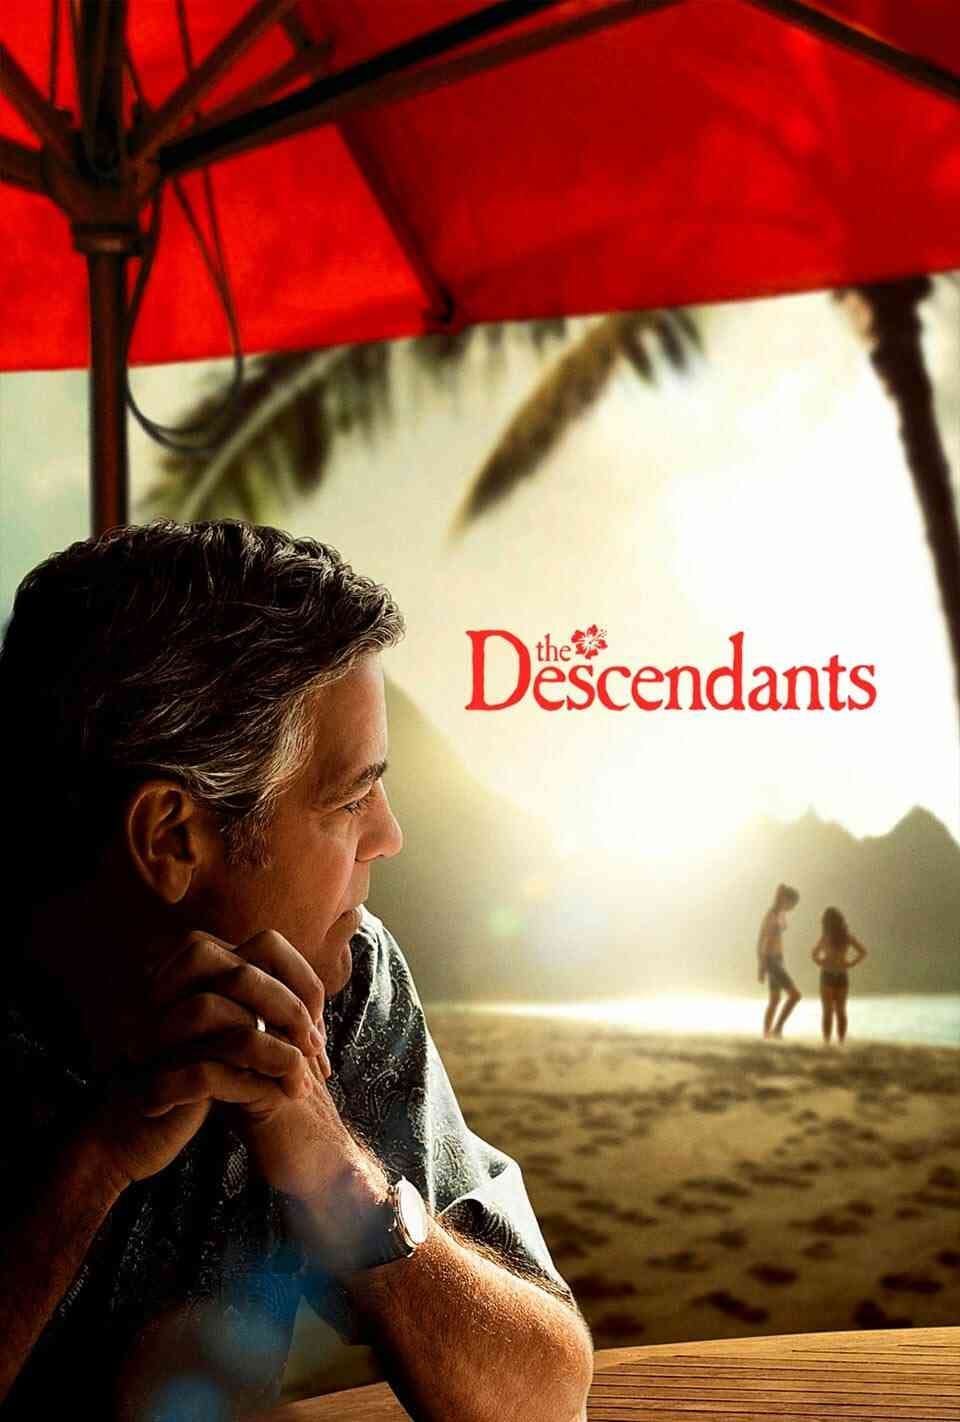 Read The Descendants screenplay (poster)